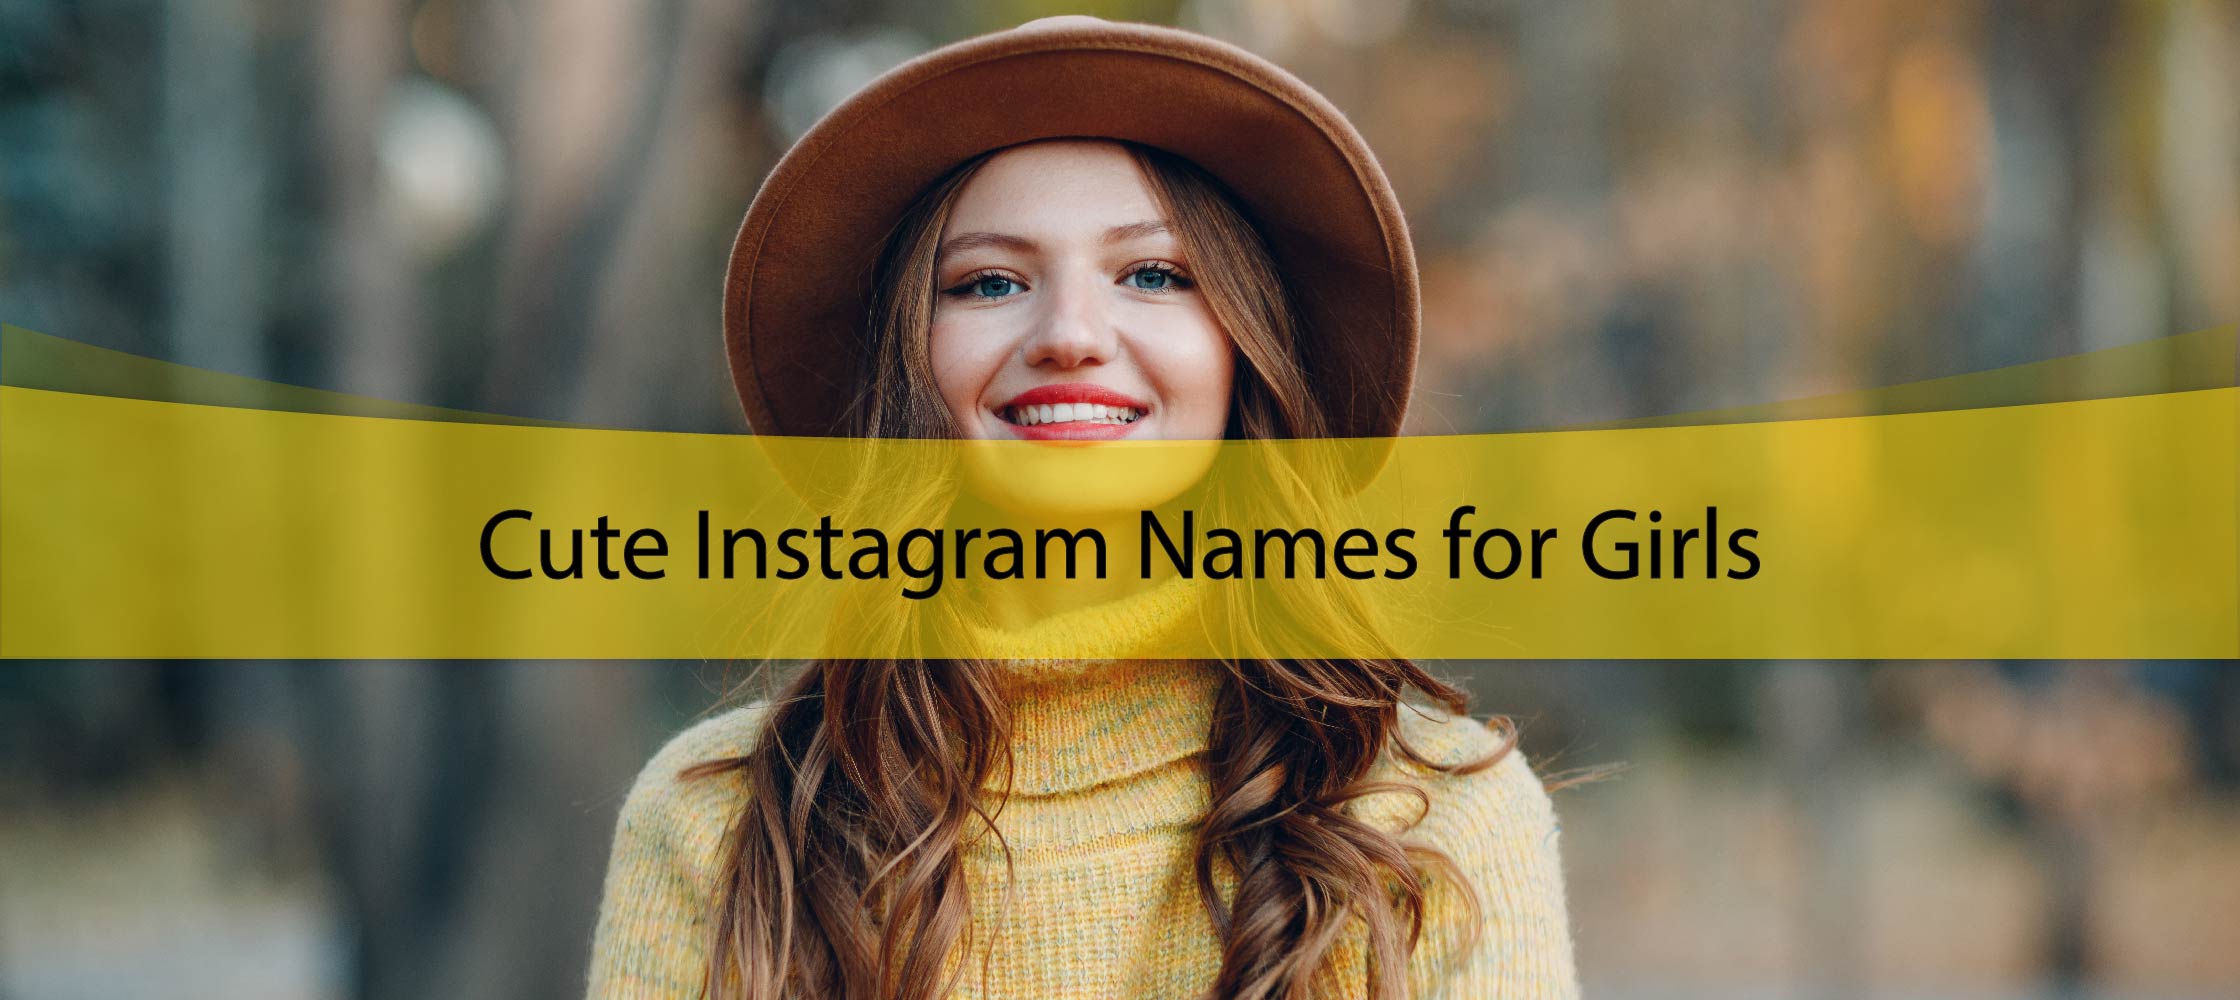 Cute Instagram Names for Girls